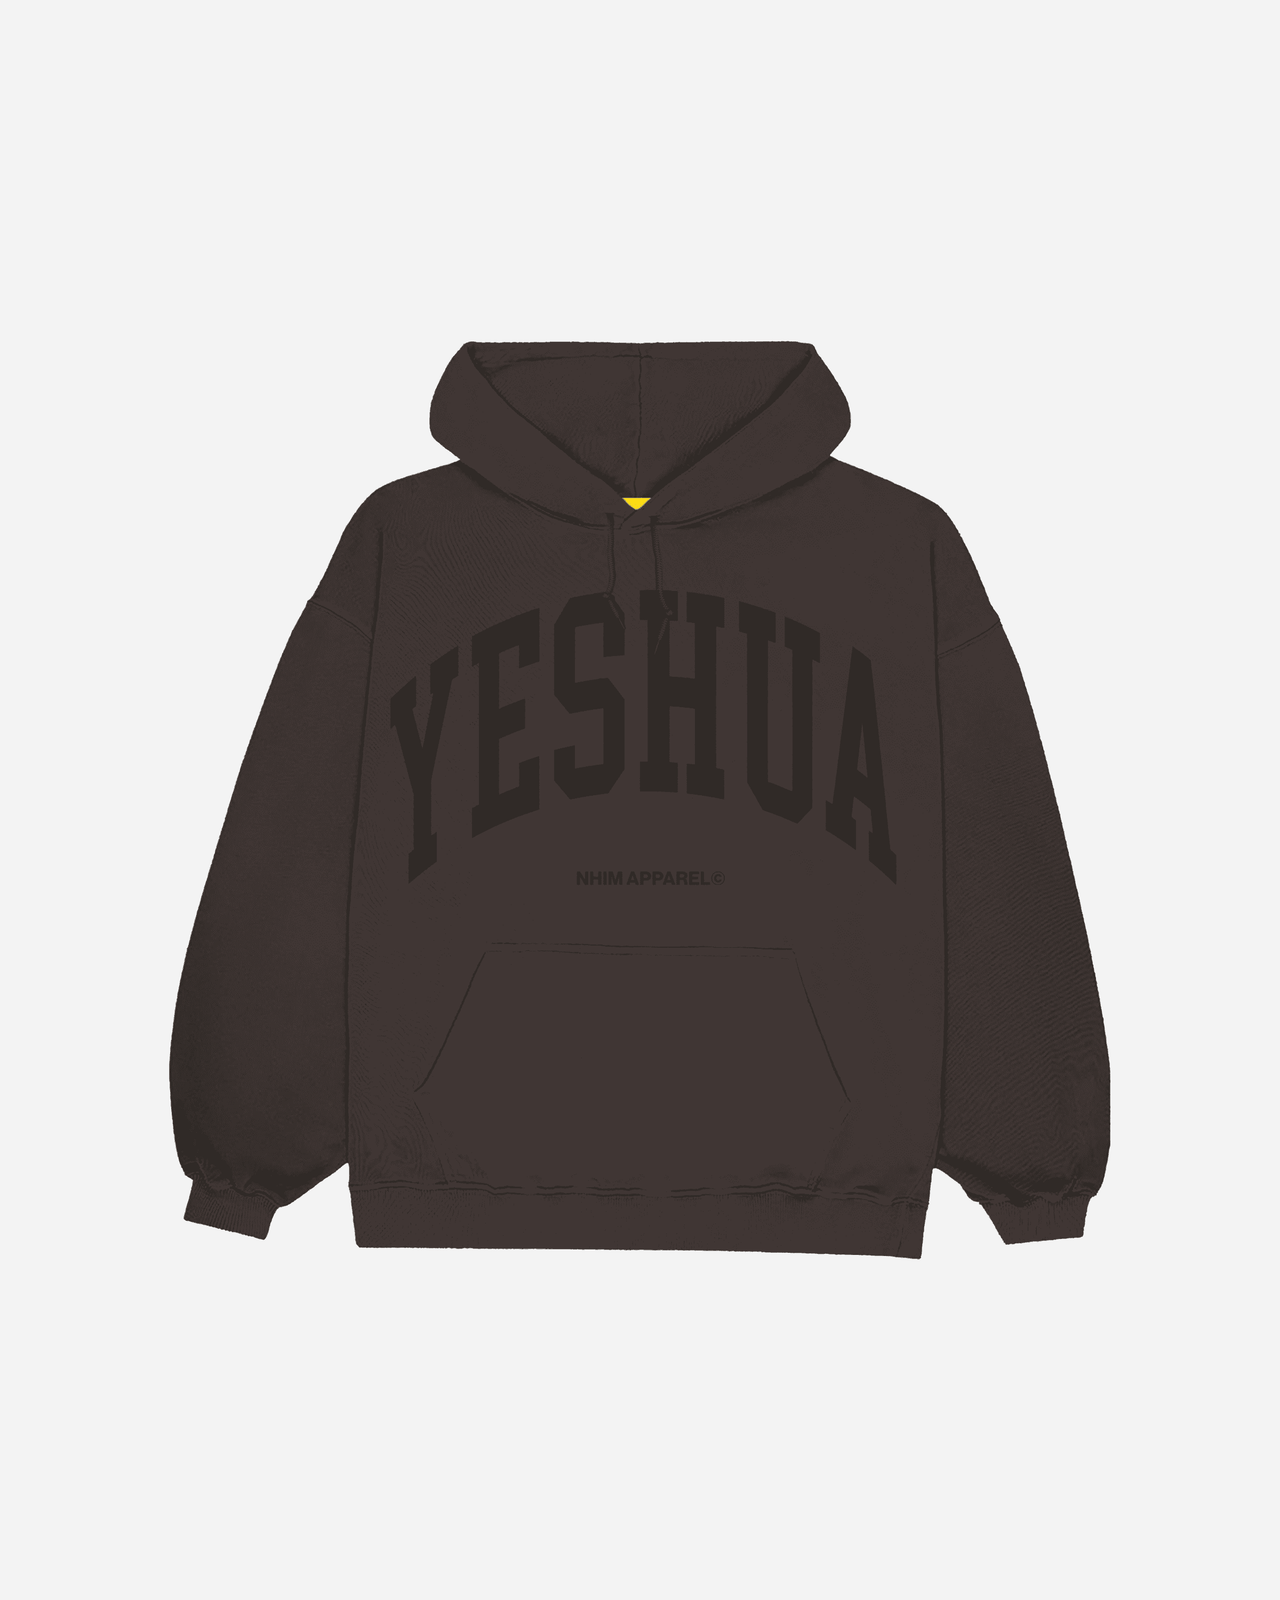 YESHUA hoodie yeshua logo dark chocolate hooded sweatshirt made by NHIM APPAREL christian clothing brand